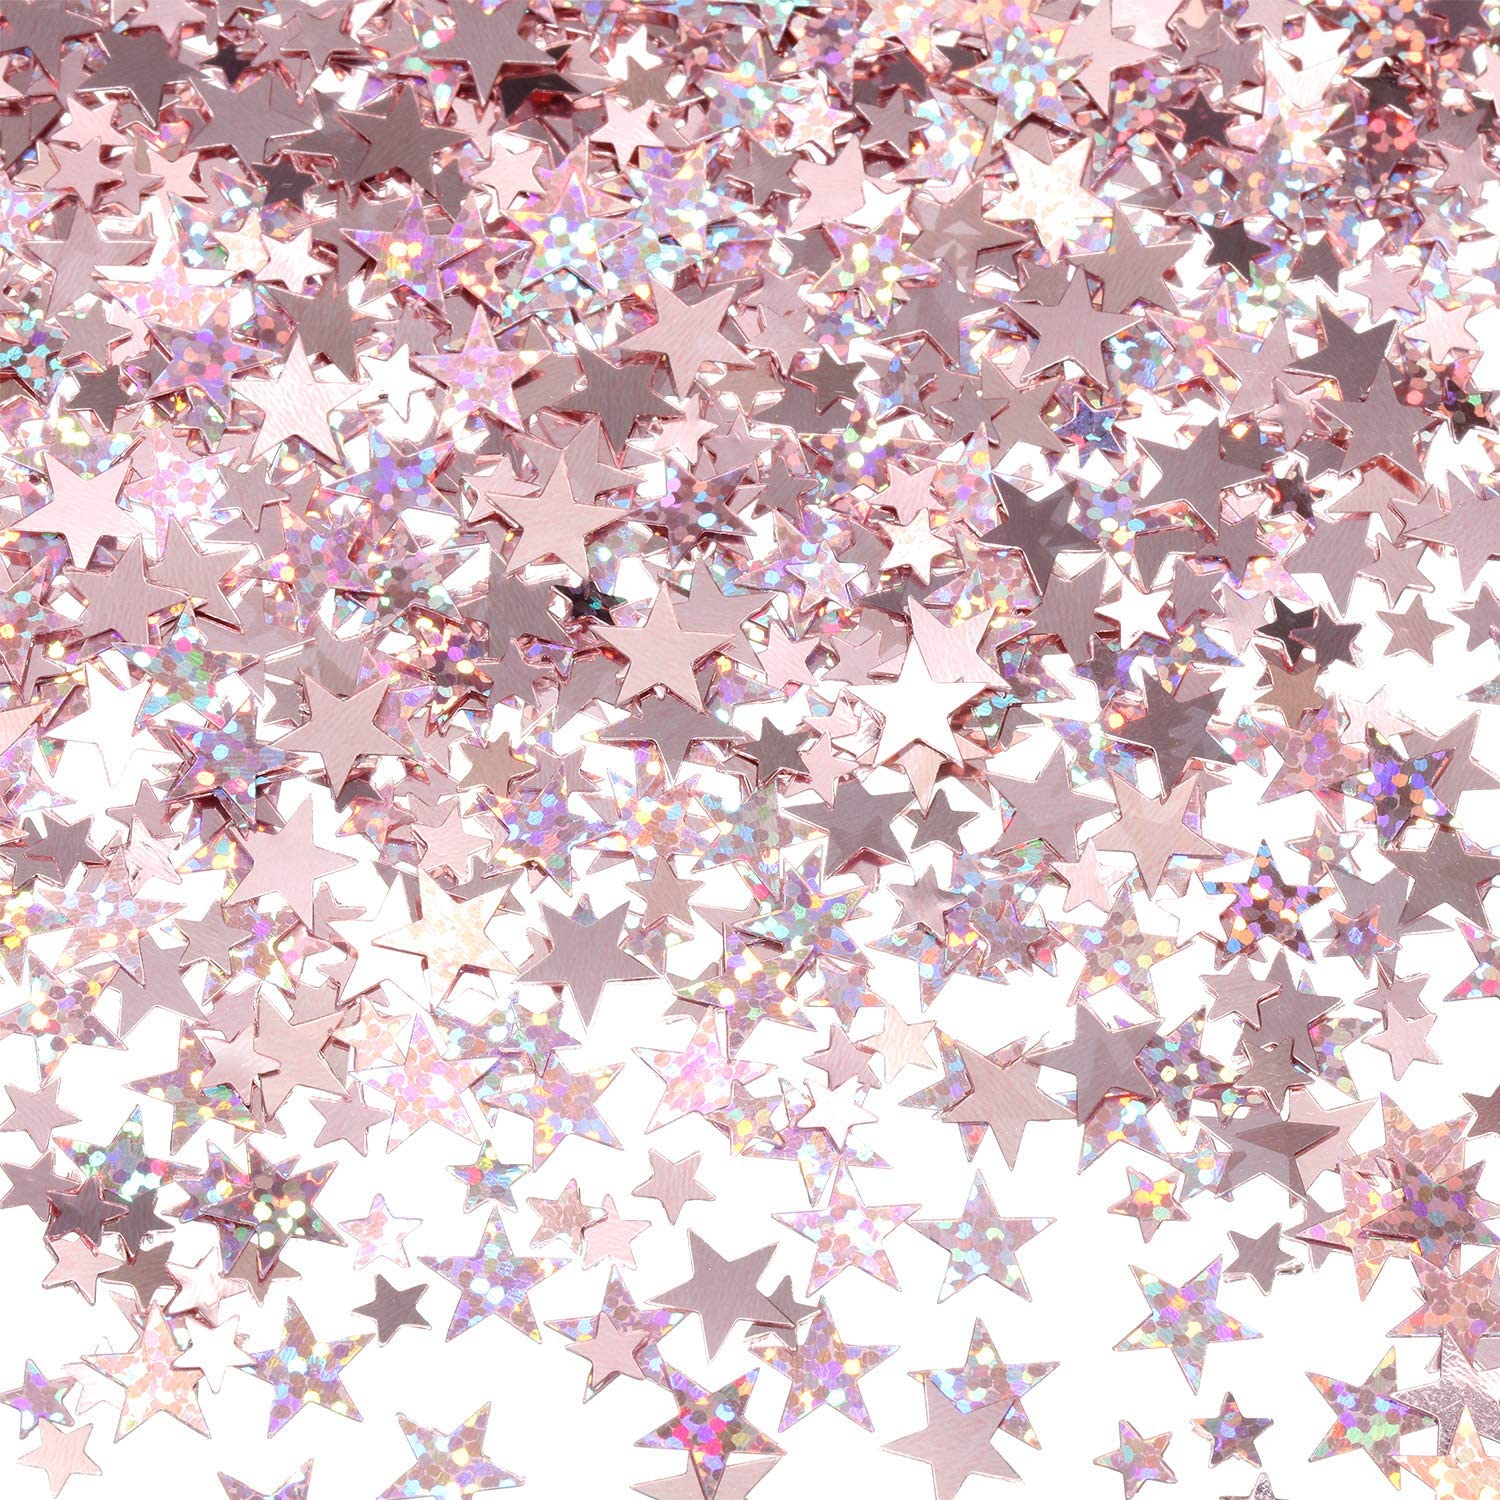 Rose Gold Star Glitter Confetti 30 Grams/ 1 Ounce